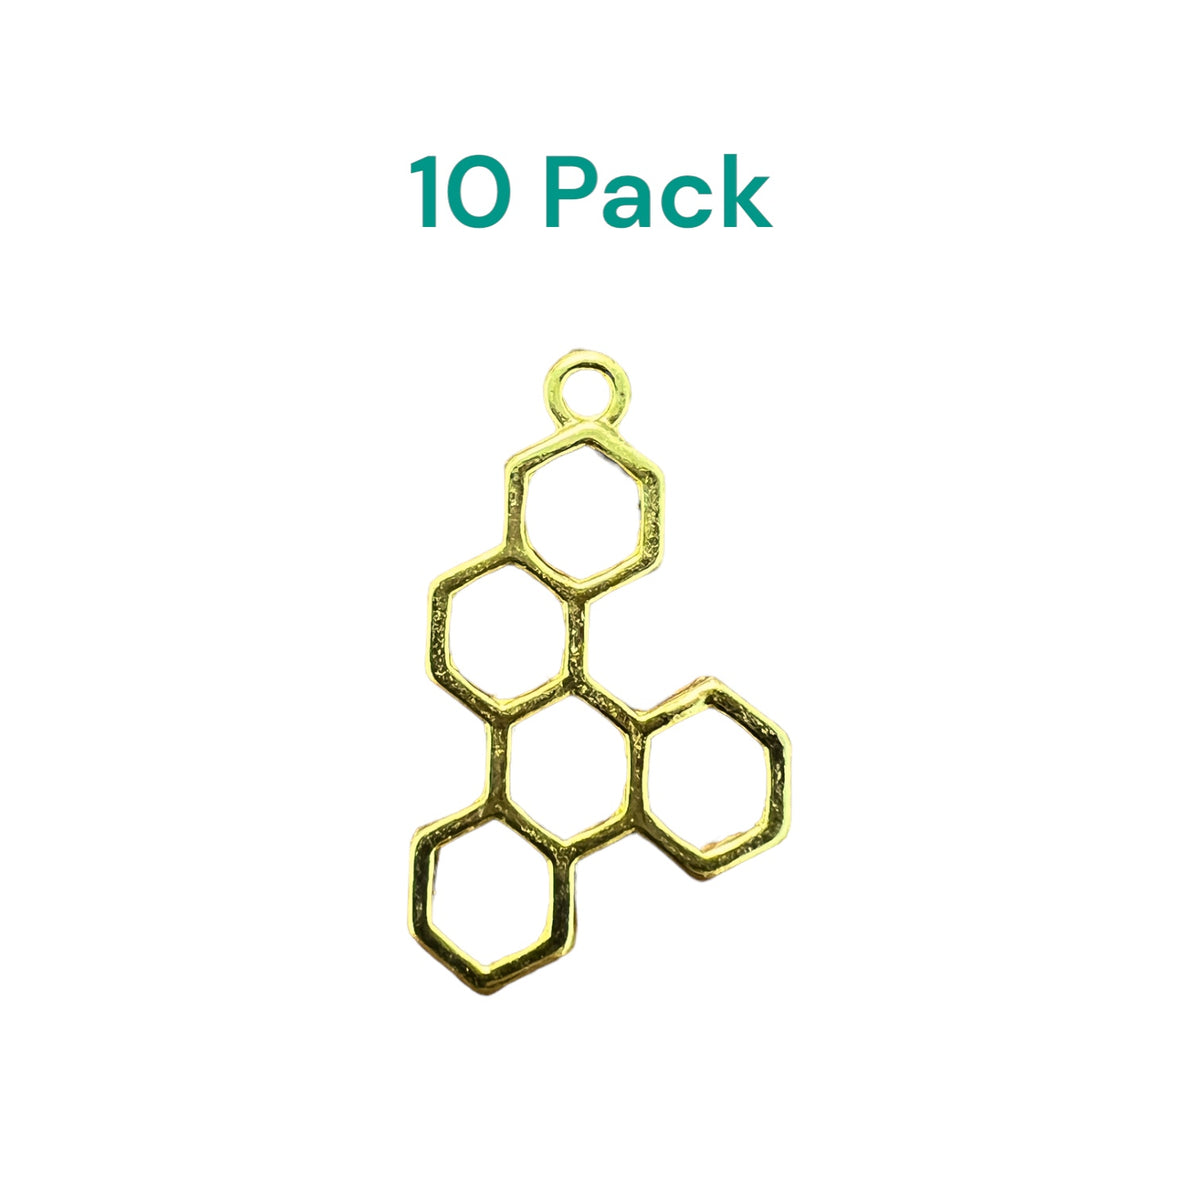 10 Pack of 5 Part Honeycomb Shaped Open Back Pendant or Earring Bezel Blank for UV or Epoxy Resin